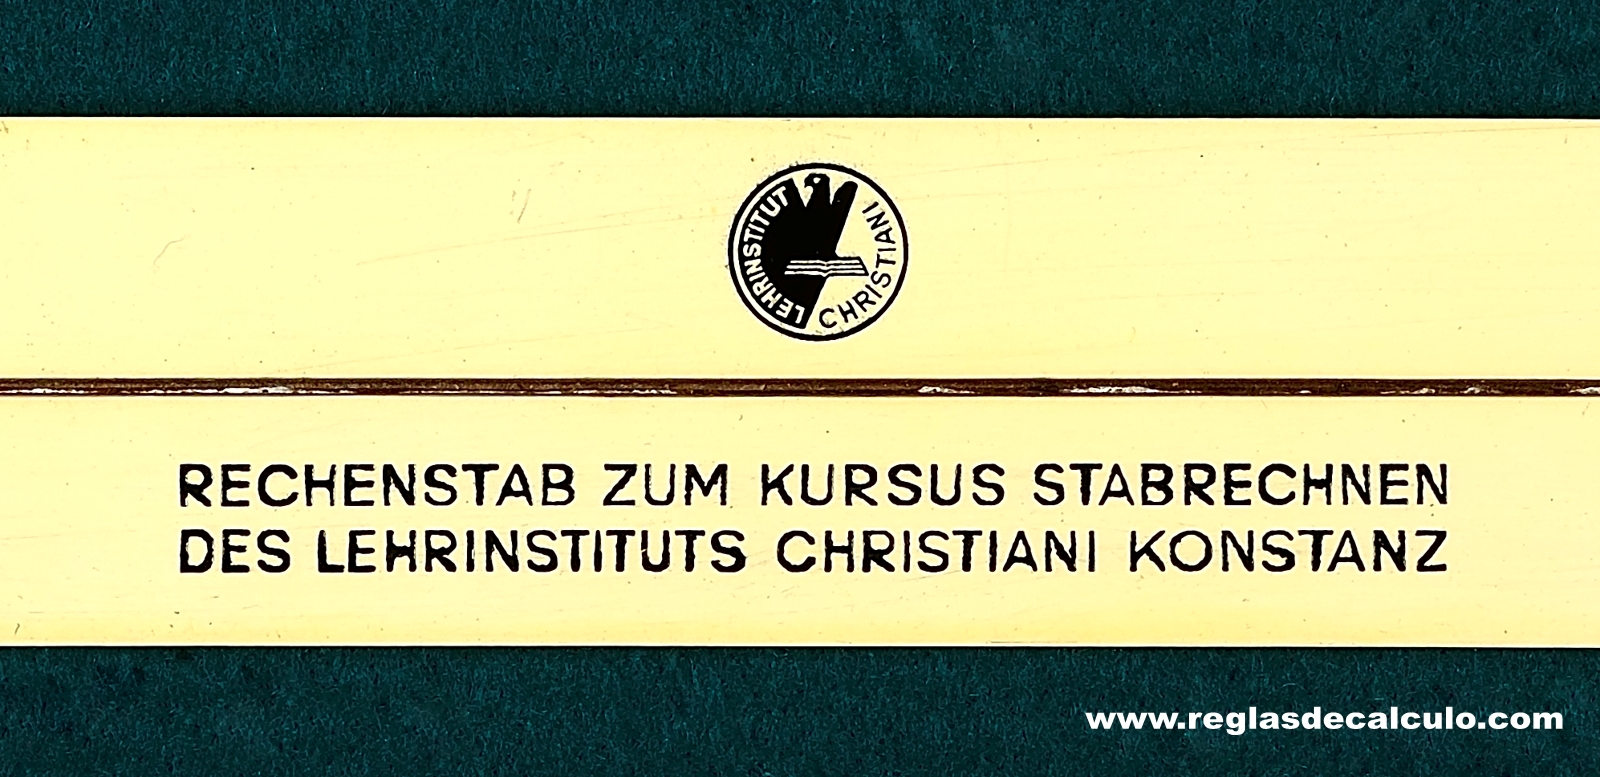 Regla de Calculo Slide rule Faber Castell Christiani Konstanz